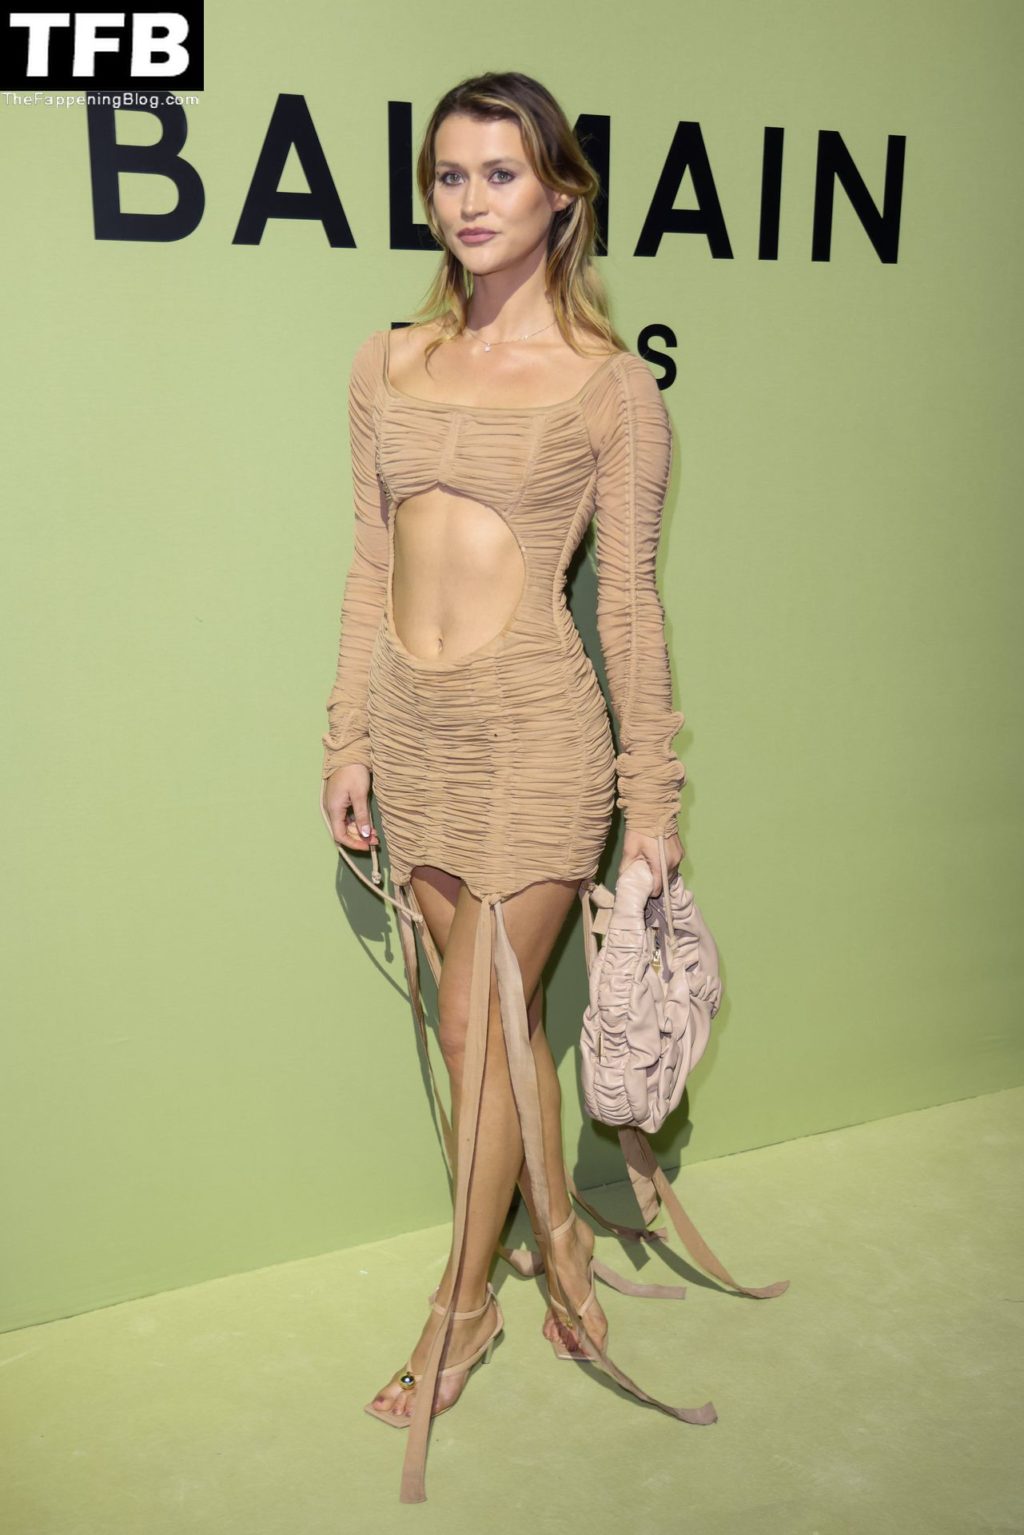 Chloe Lecareux Flaunts Her Sexy Legs During Paris Fashion Week (11 Photos)